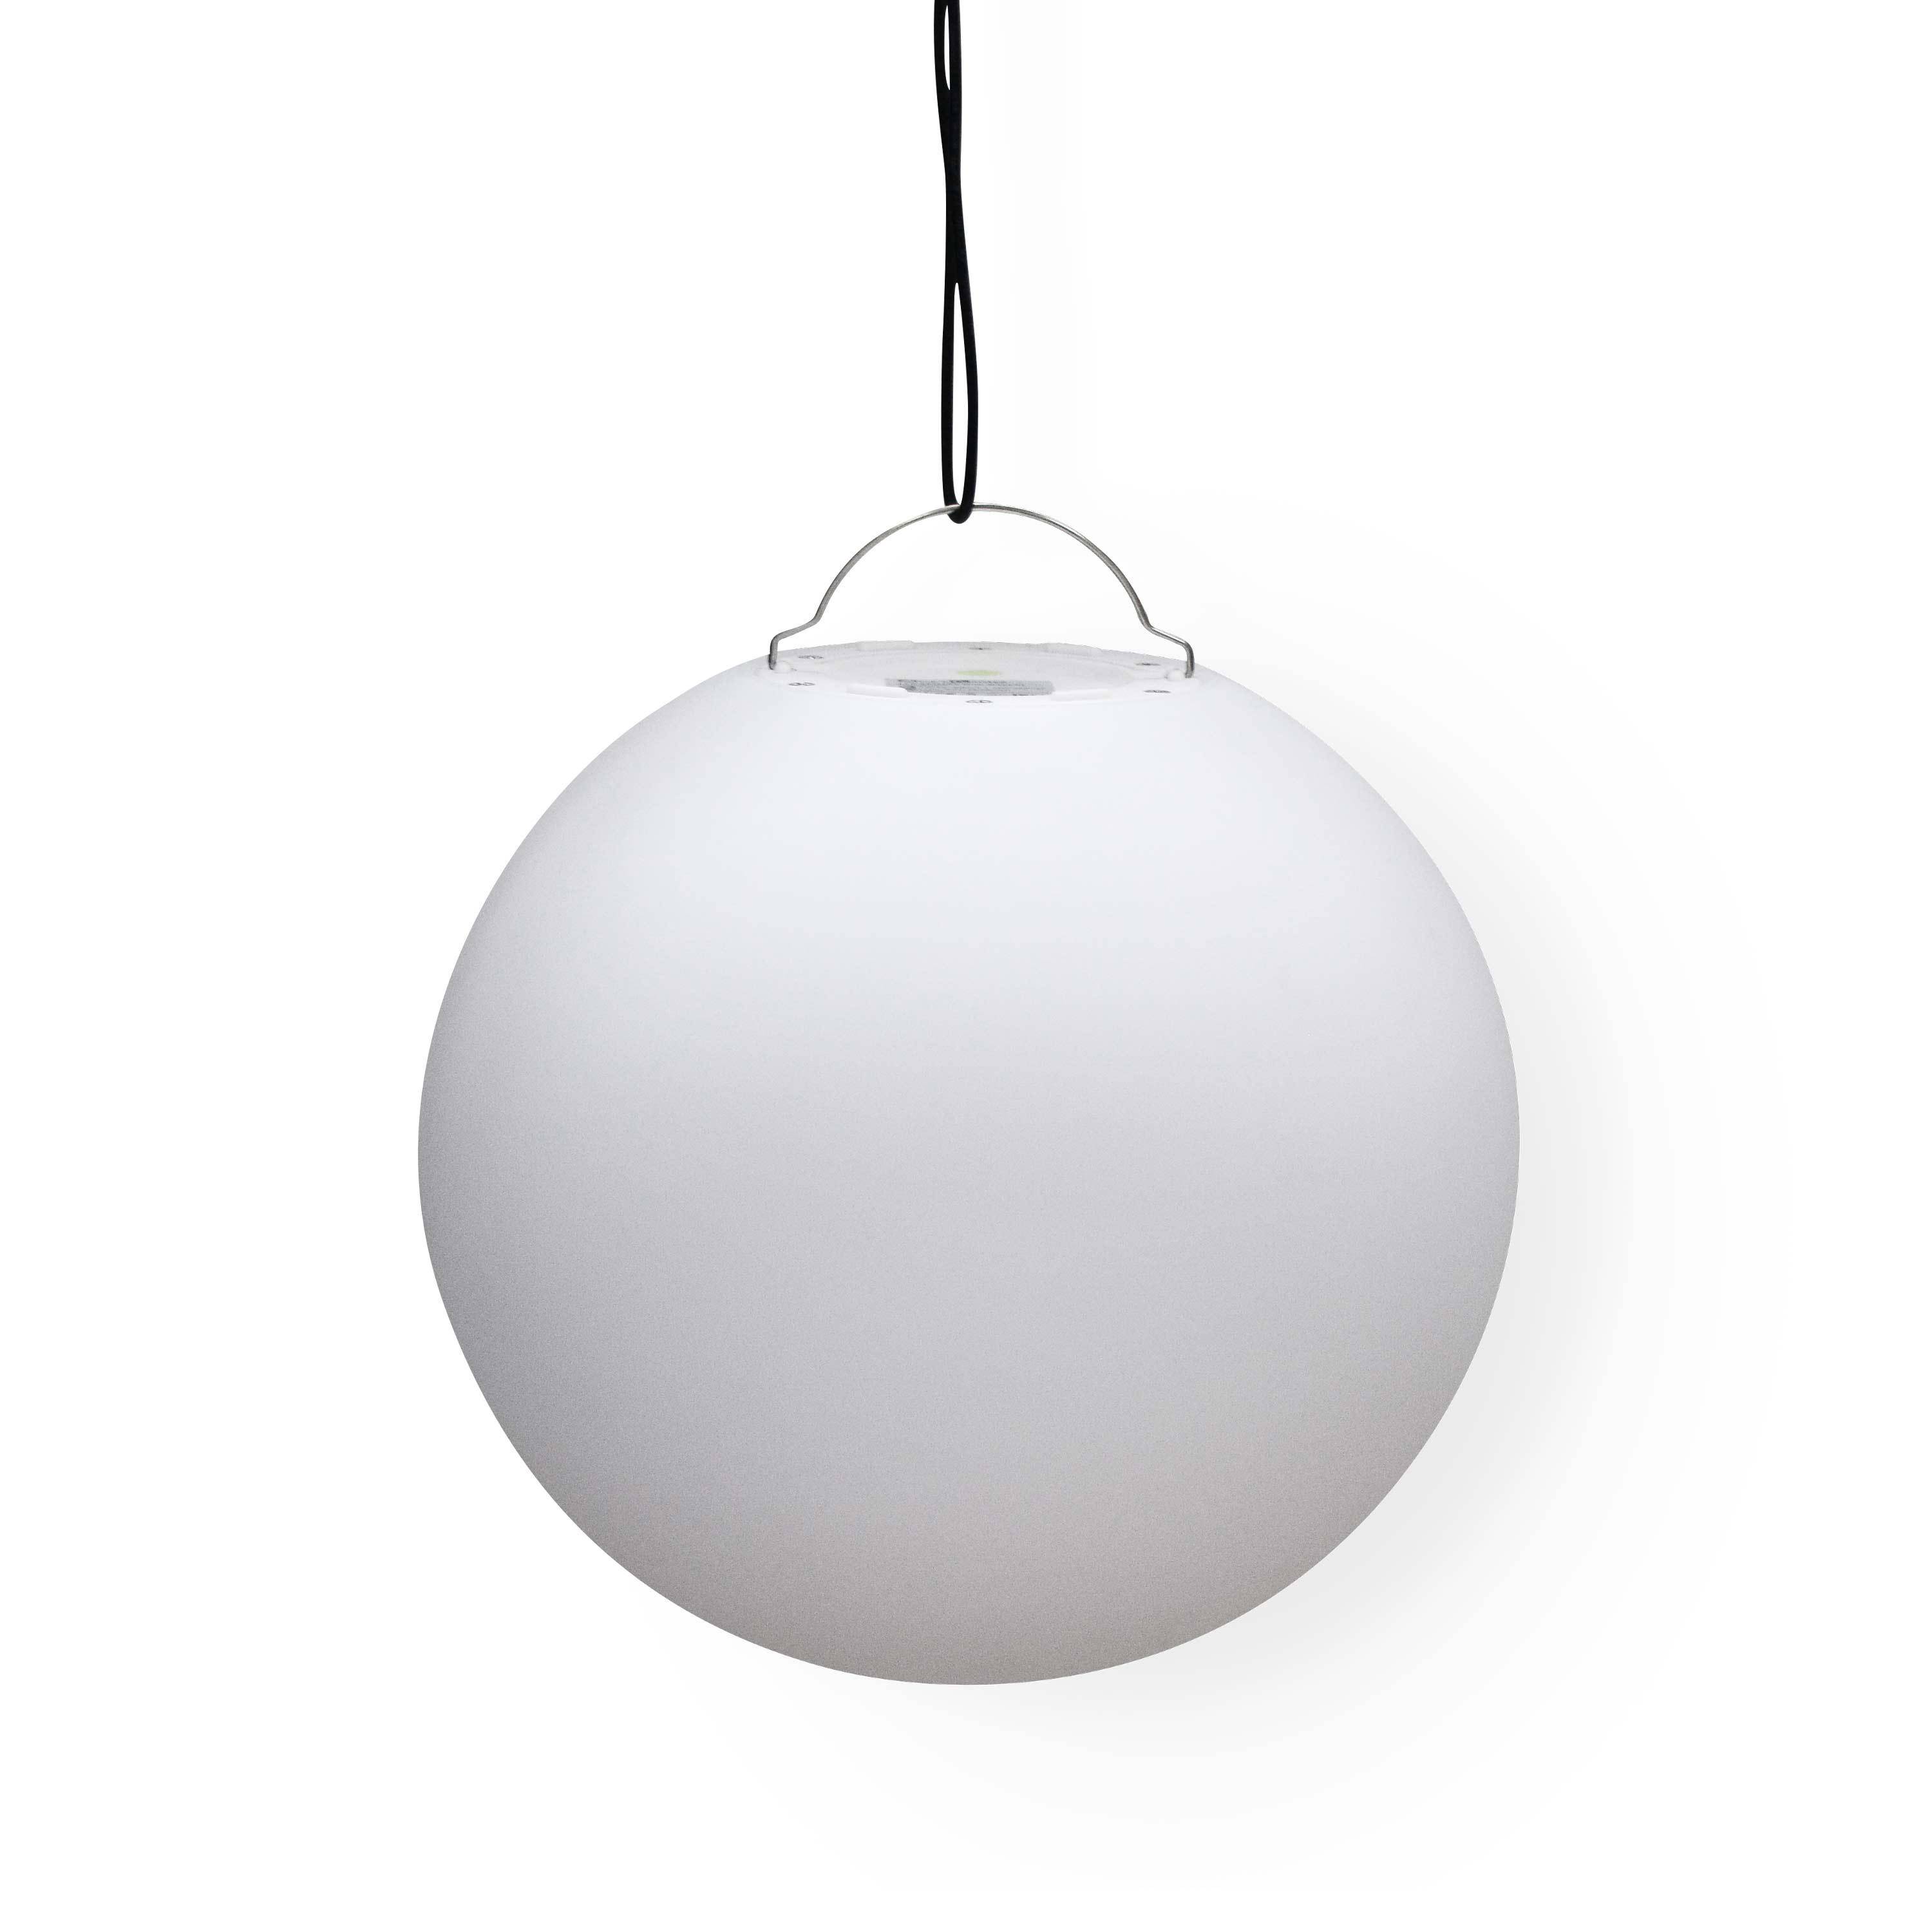 30cm spherical LED lamp – Decorative light sphere, remote control, Warm white,sweeek,Photo1